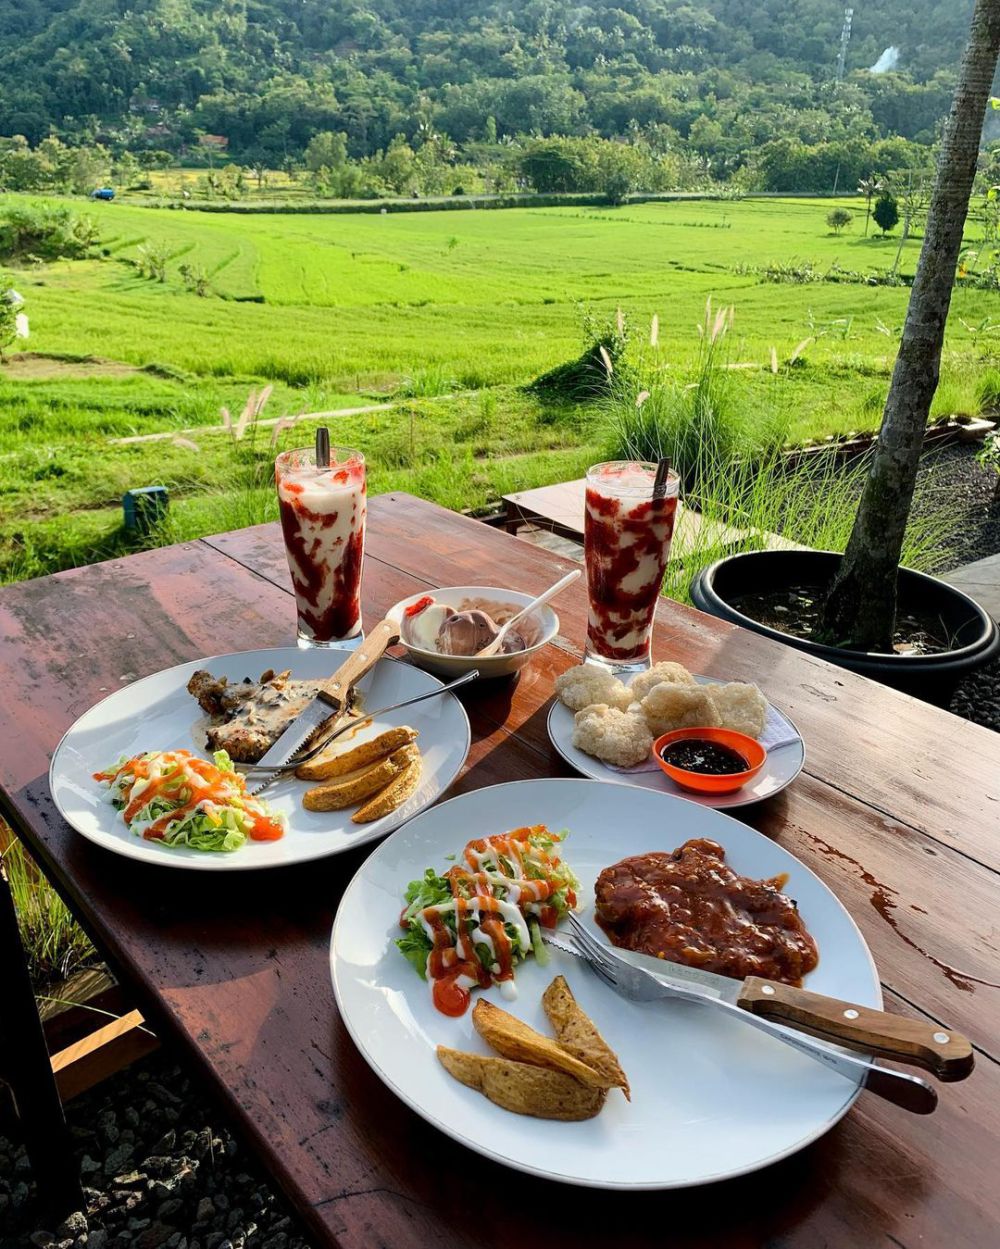 Marron Cafe, Kafe dengan View Perbukitan Hijau di Kulon Progo